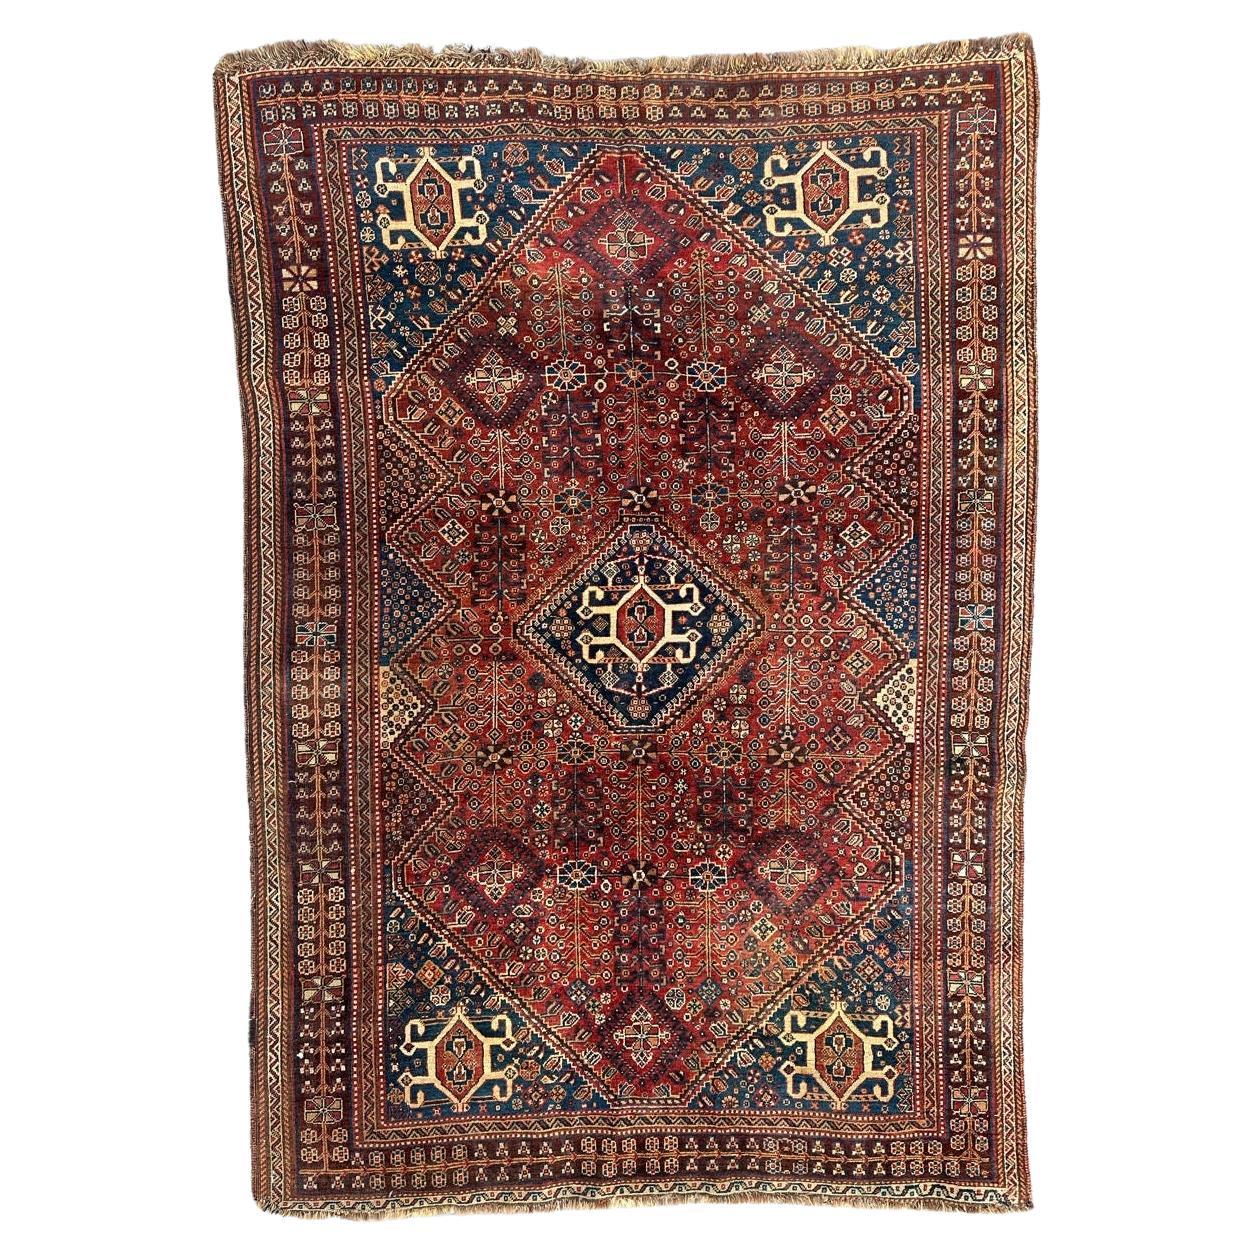 Le beau tapis antique qashqai de Bobyrug  en vente